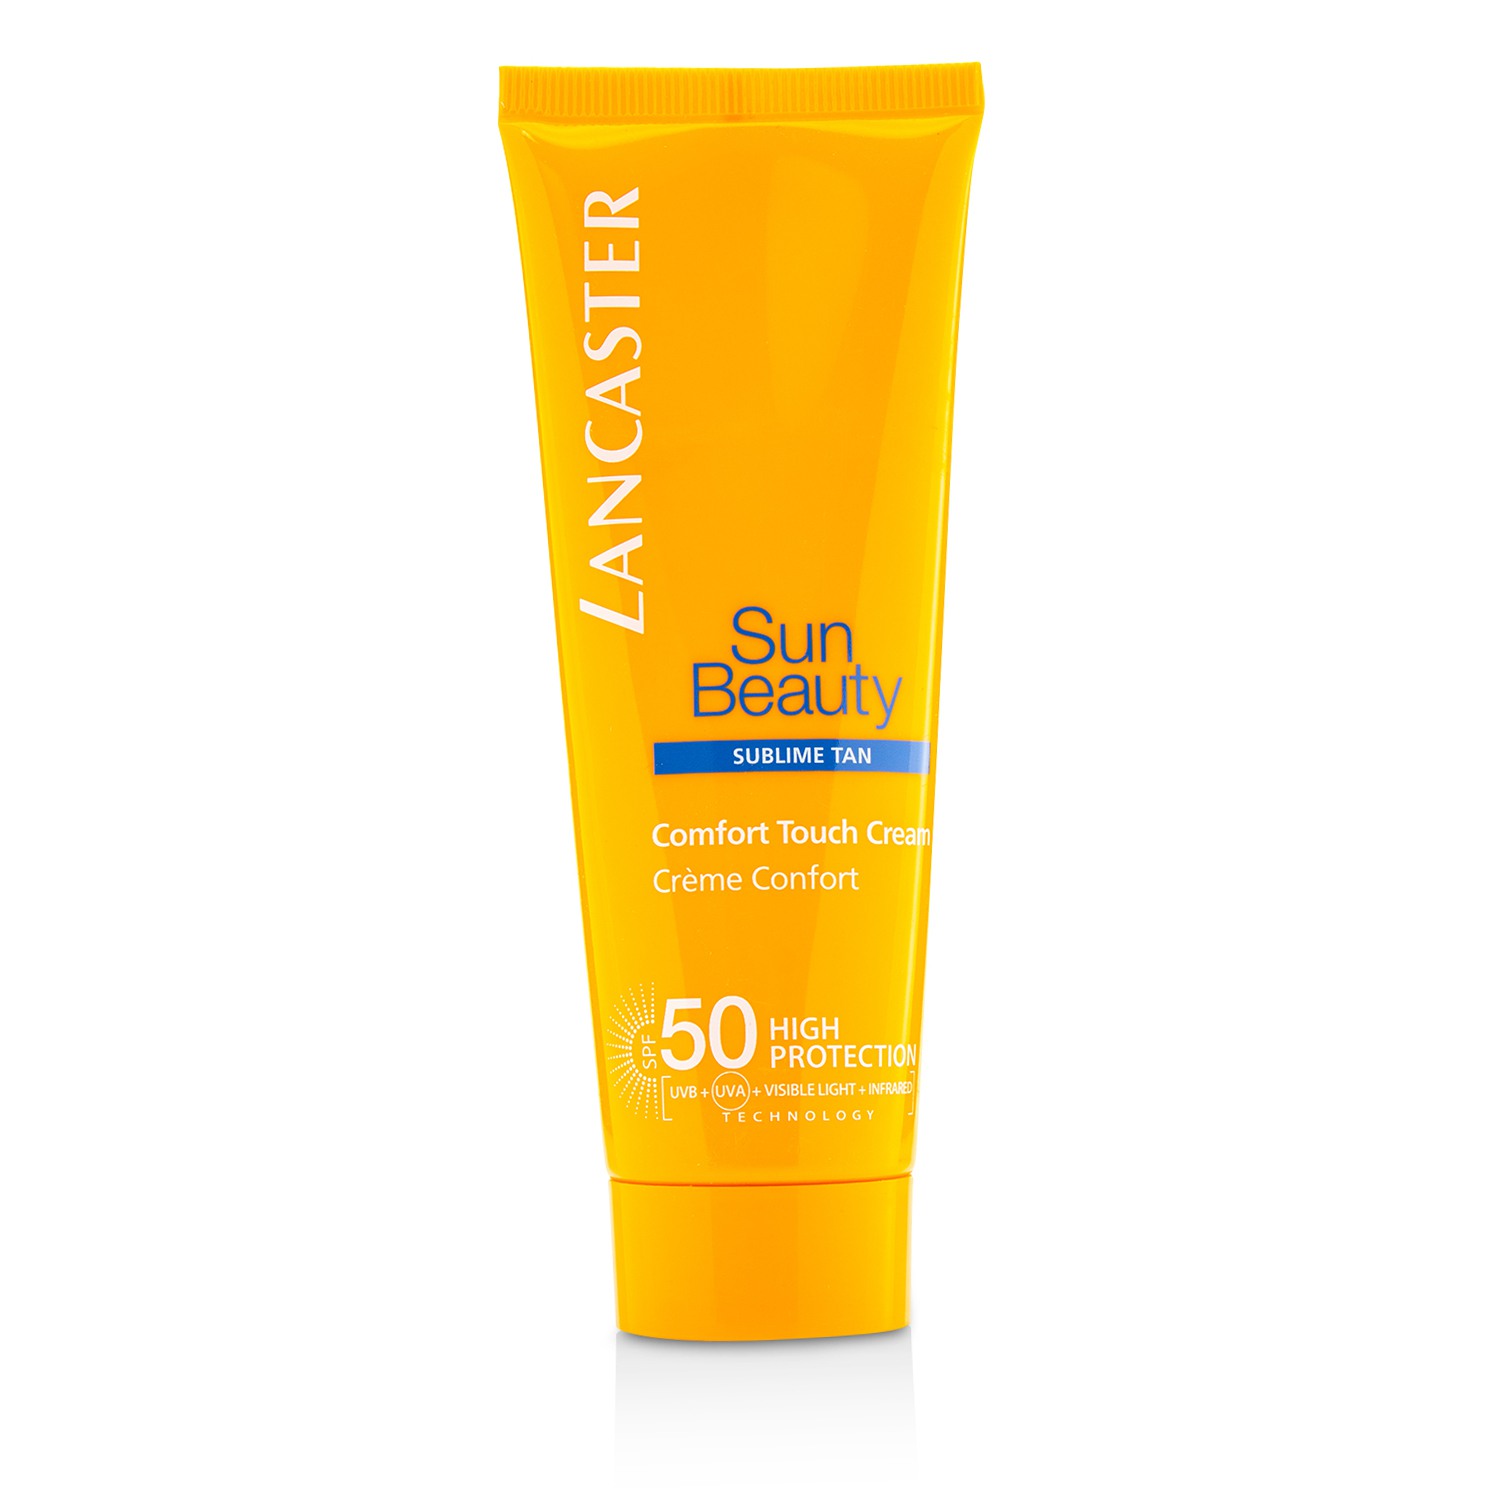 Sun Beauty Comfort Touch Cream SPF50 Lancaster Image